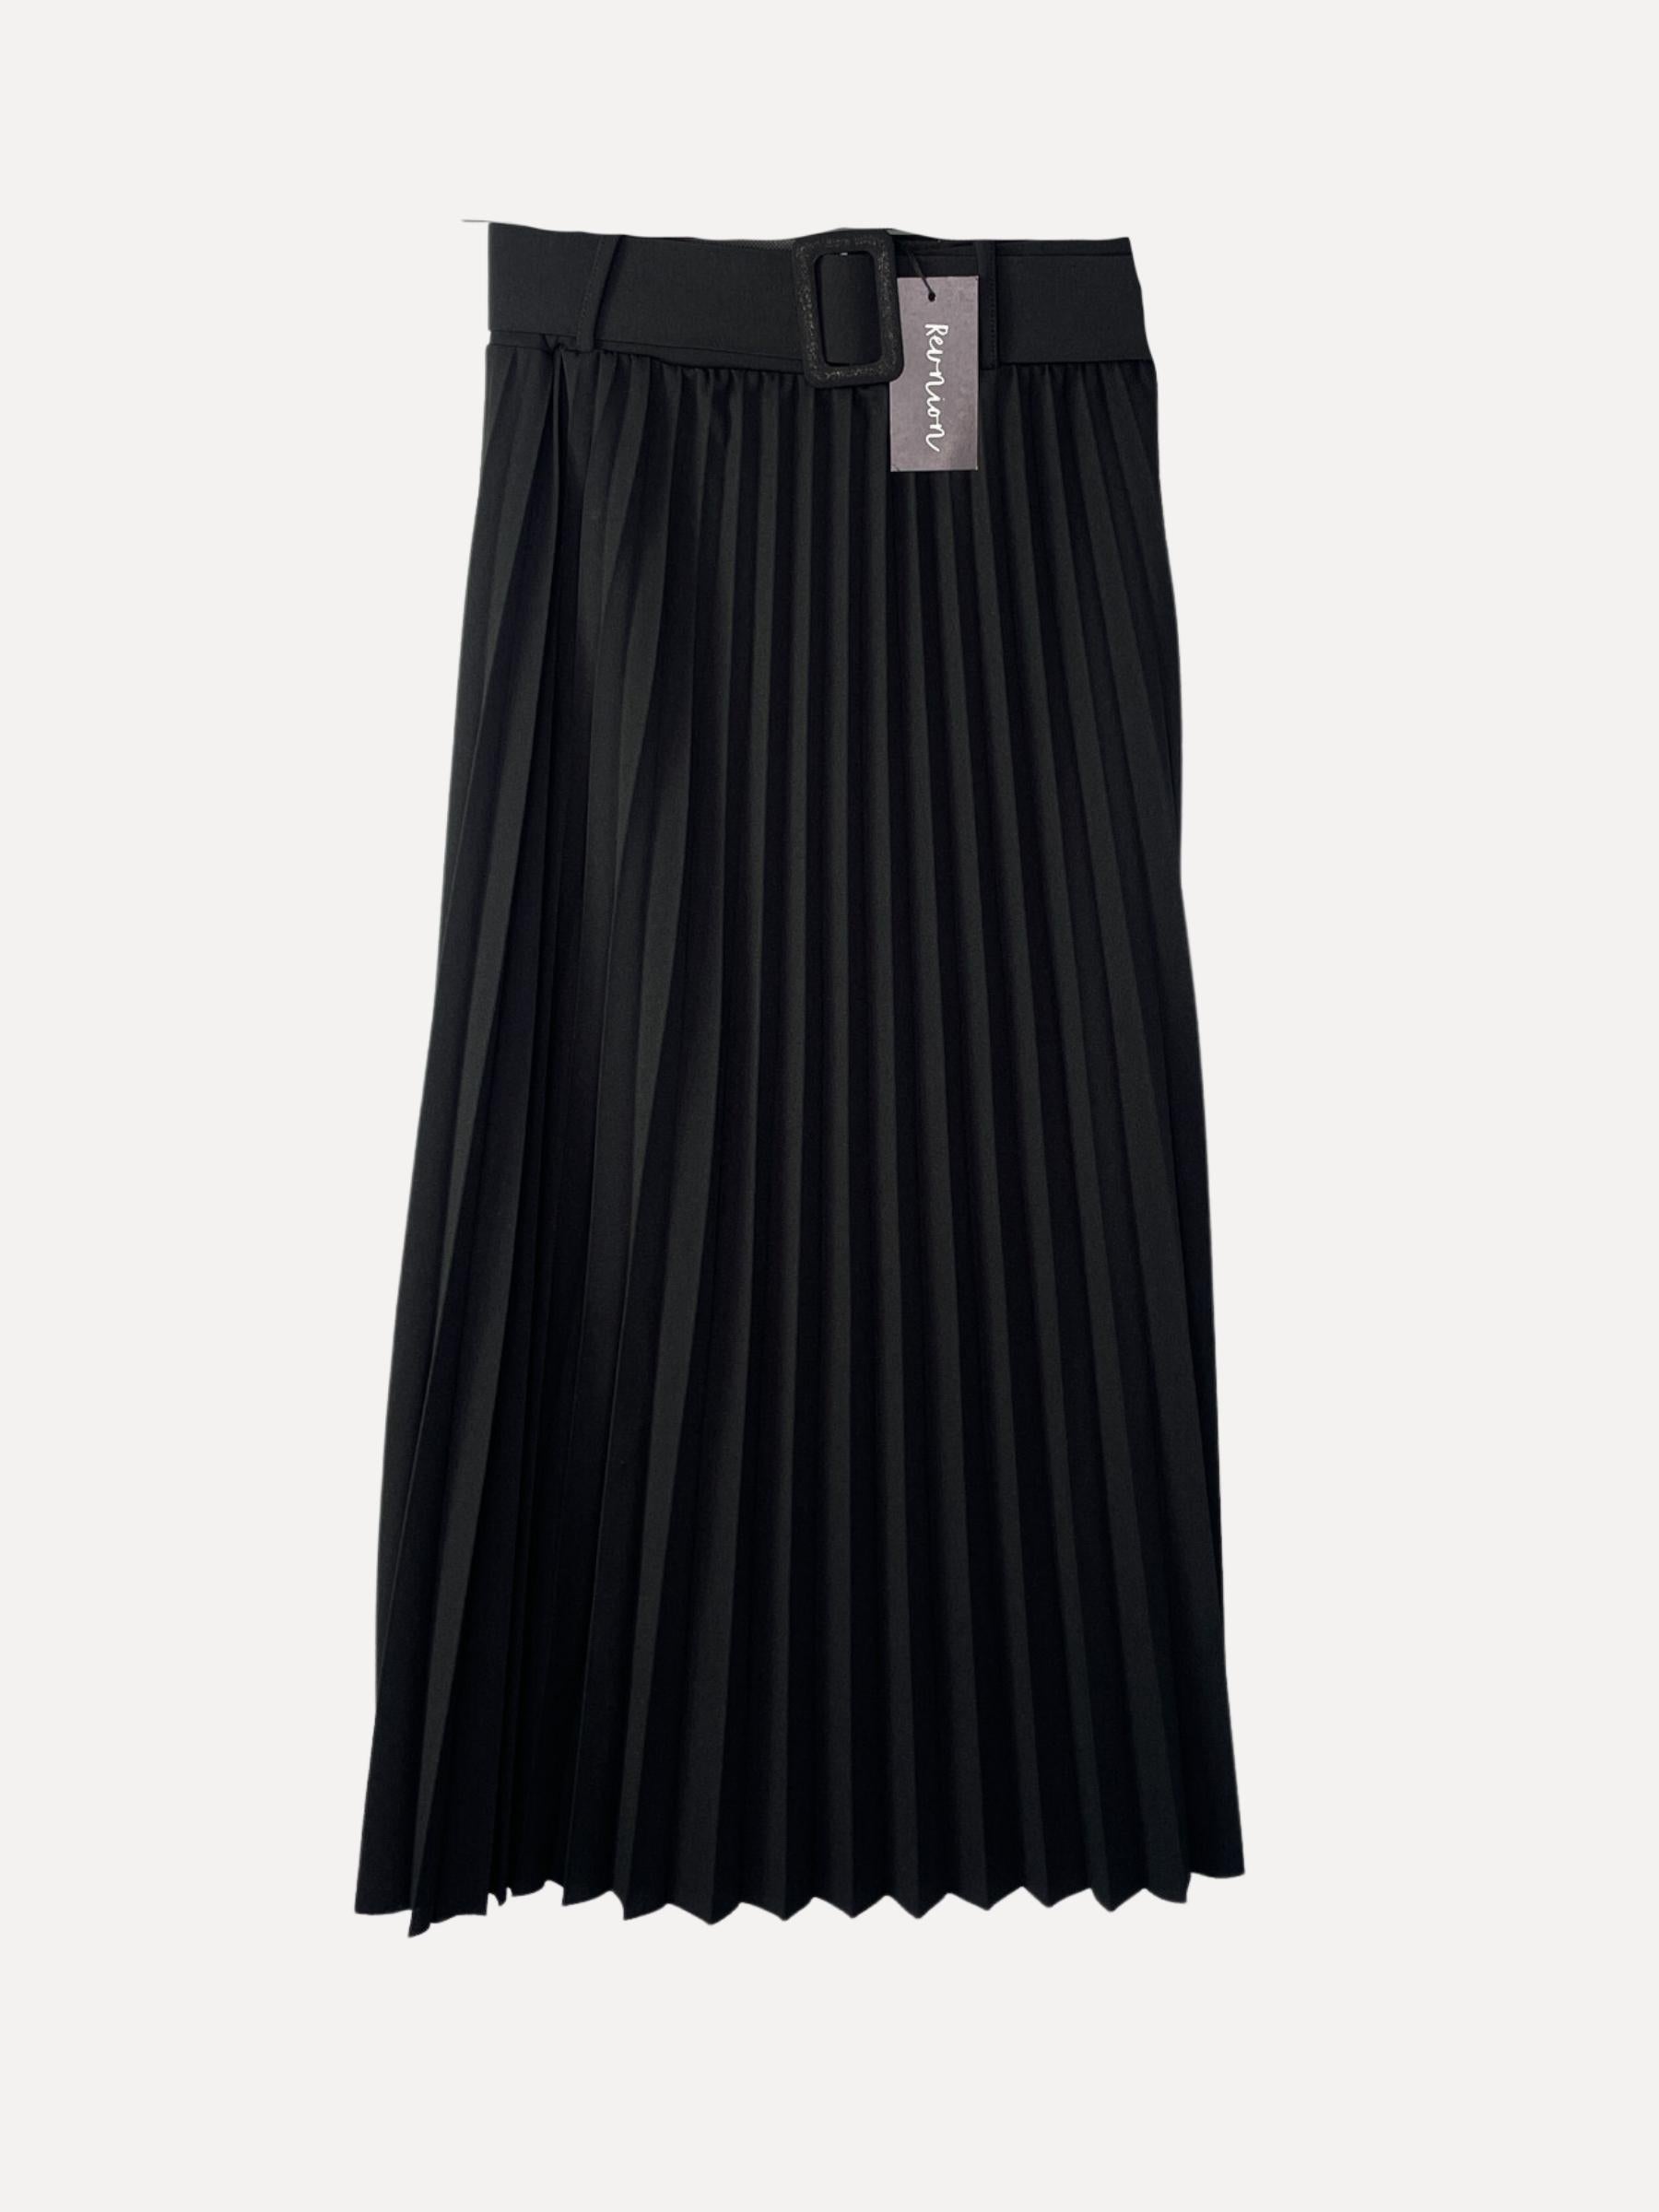 NEGRONI Skirt, Black